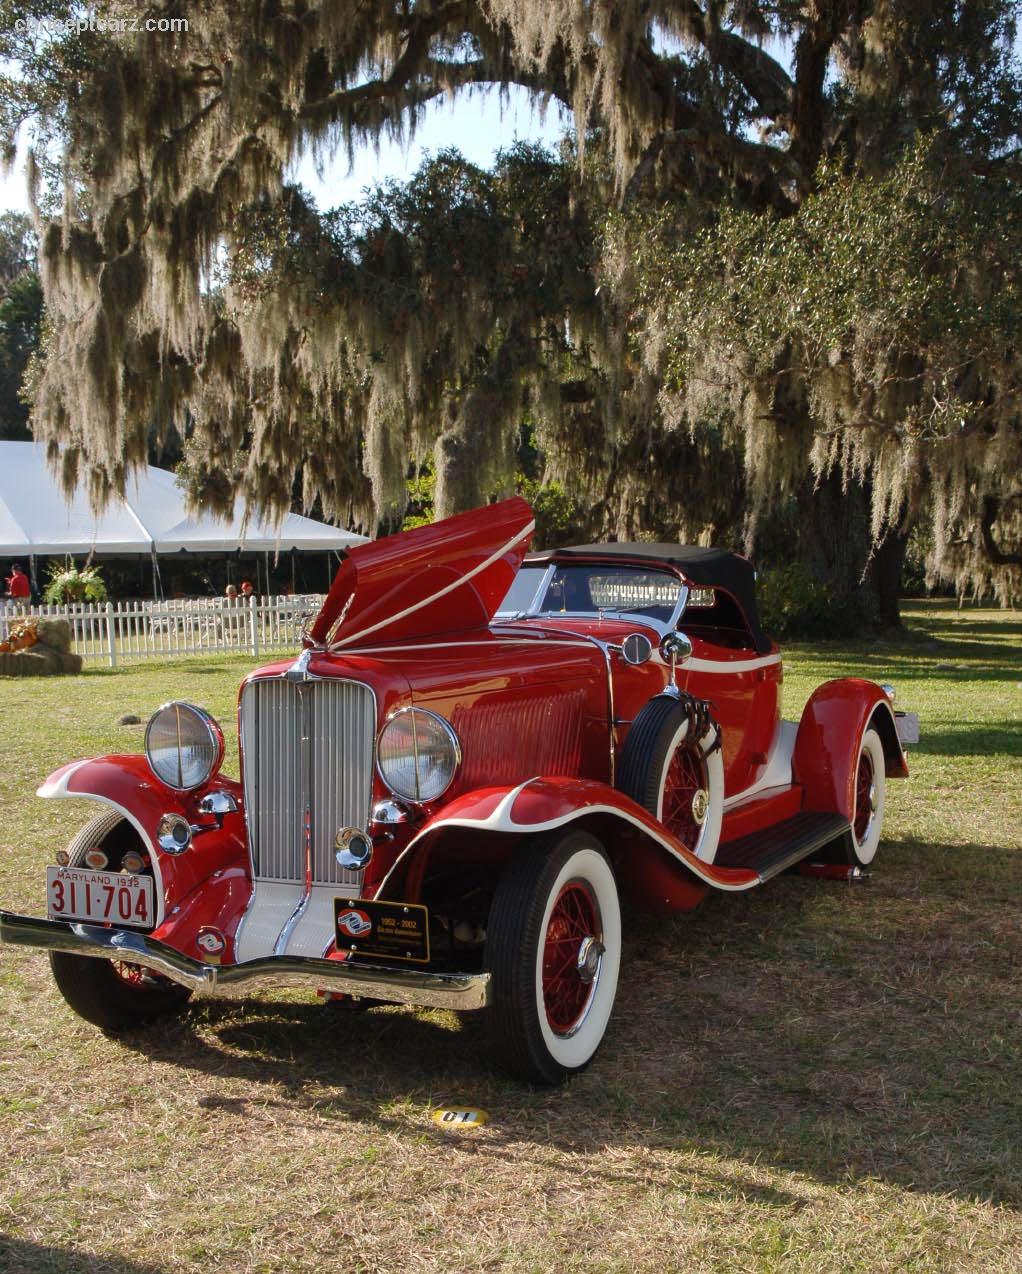 1932 Auburn 8-100